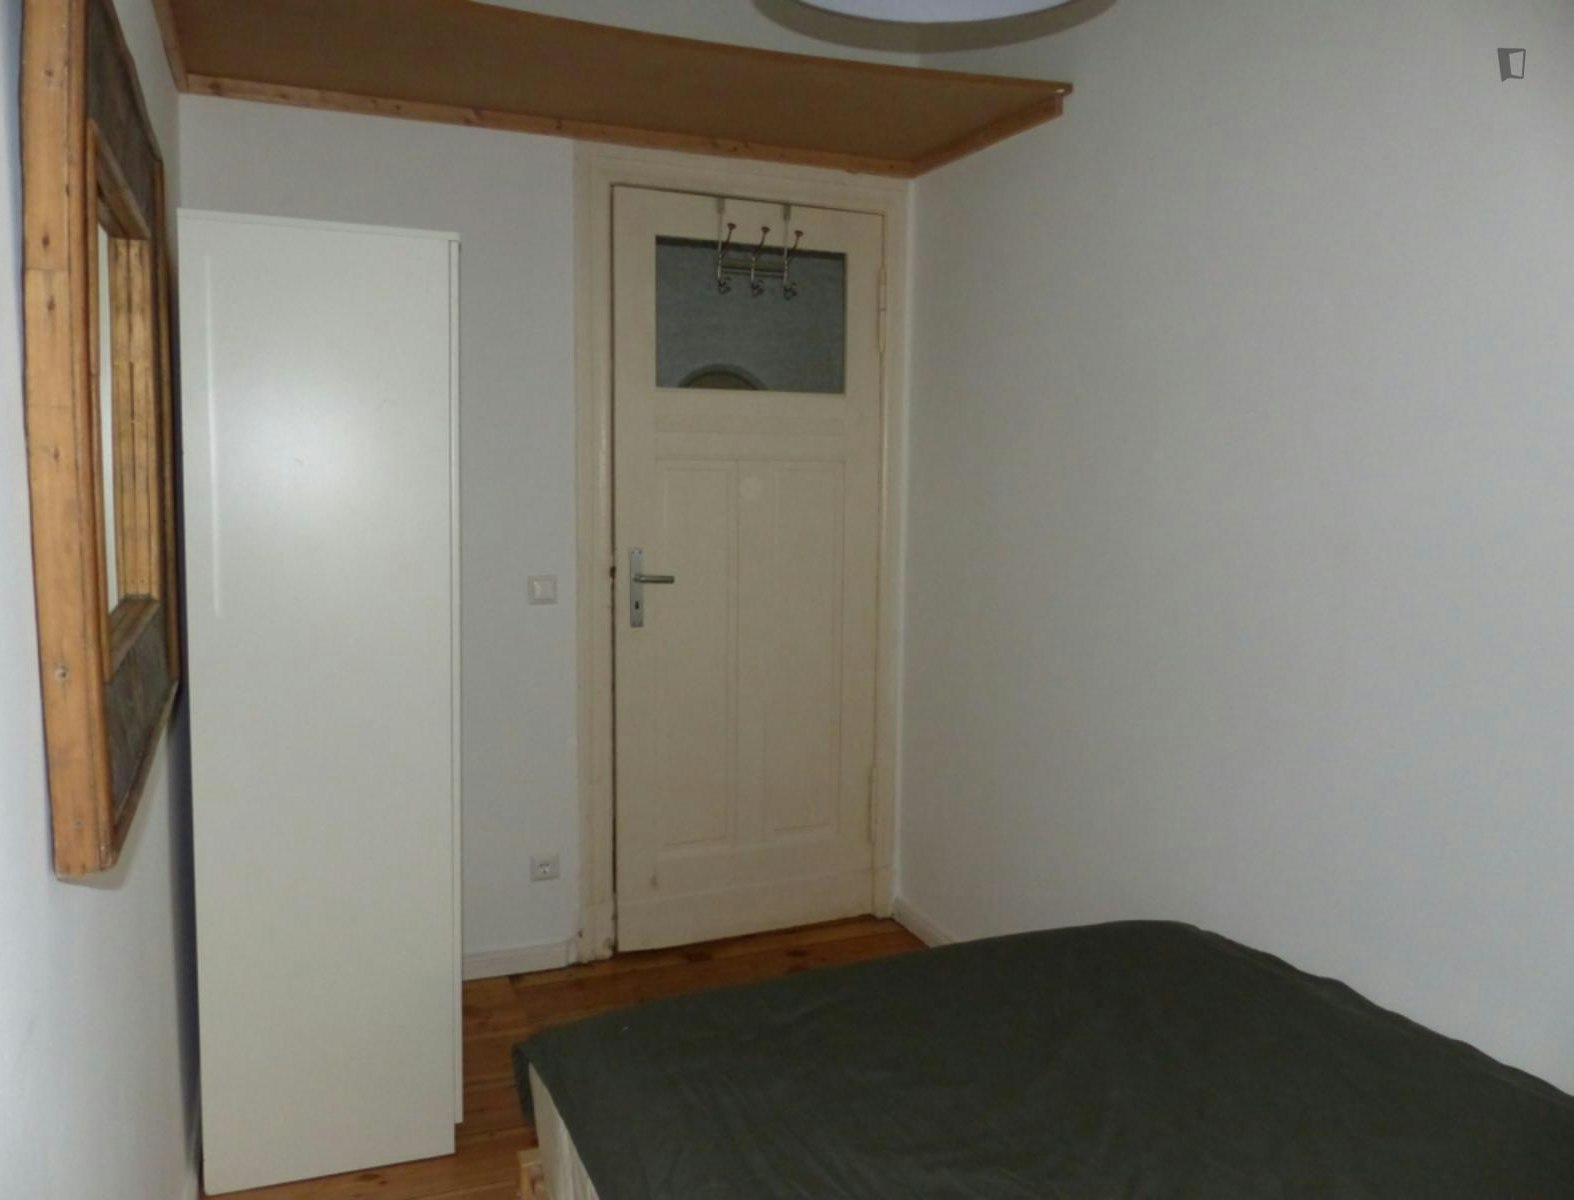 Retro 1-bedroom apartment in Neukölln